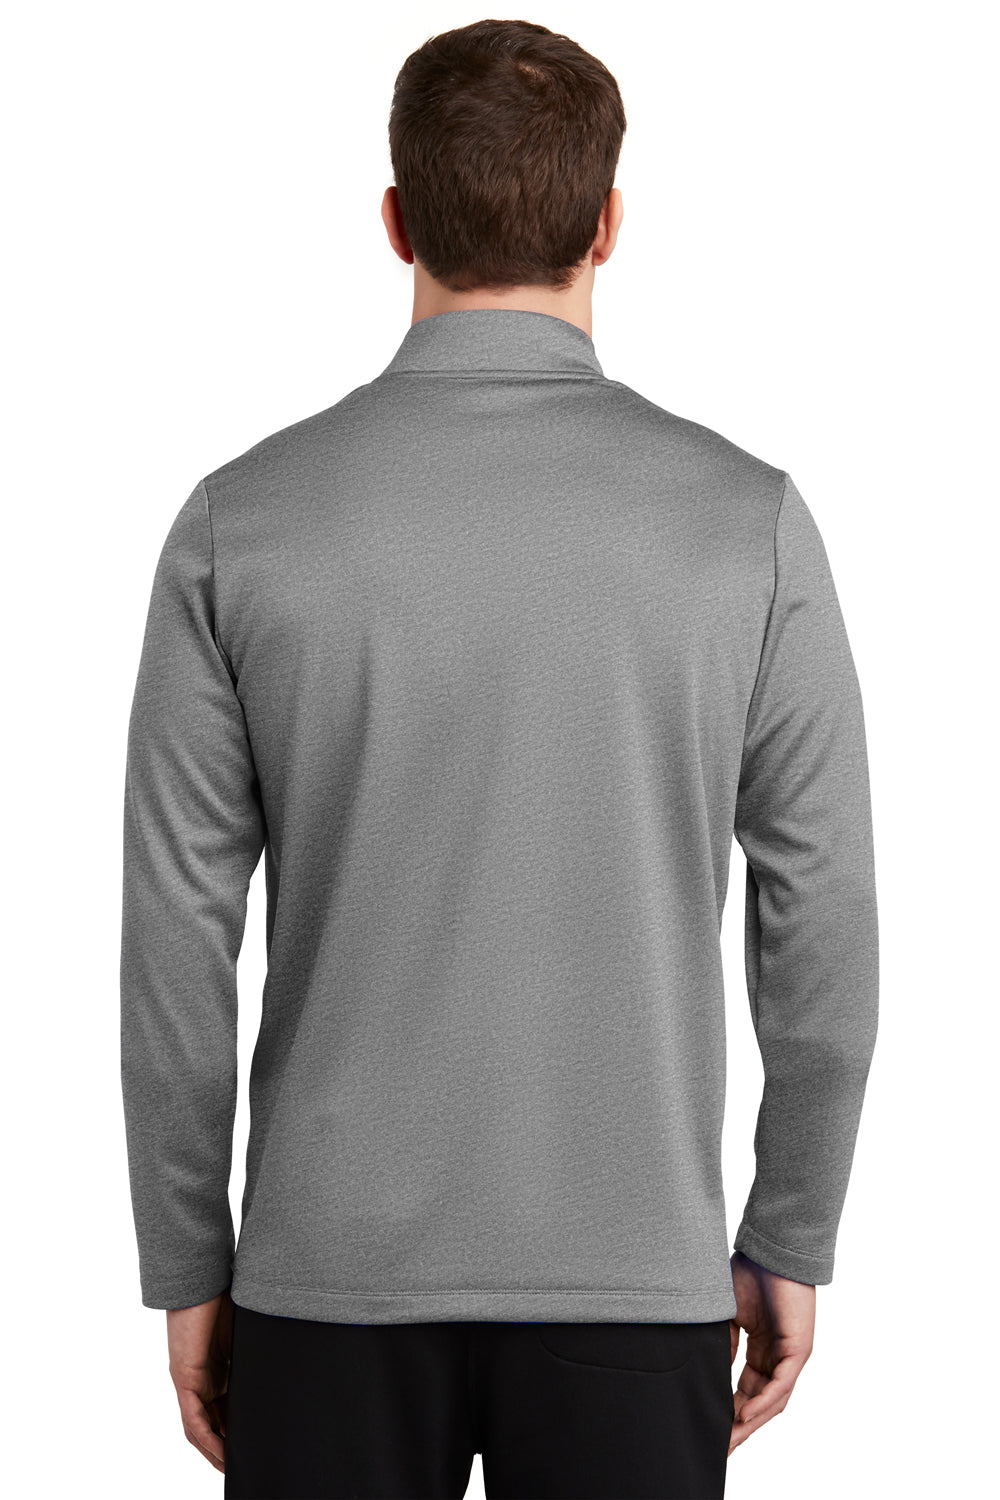 Nike NKAH6418 Mens Therma-Fit Moisture Wicking Fleece Full Zip Sweatshirt Heather Dark Grey Model Back